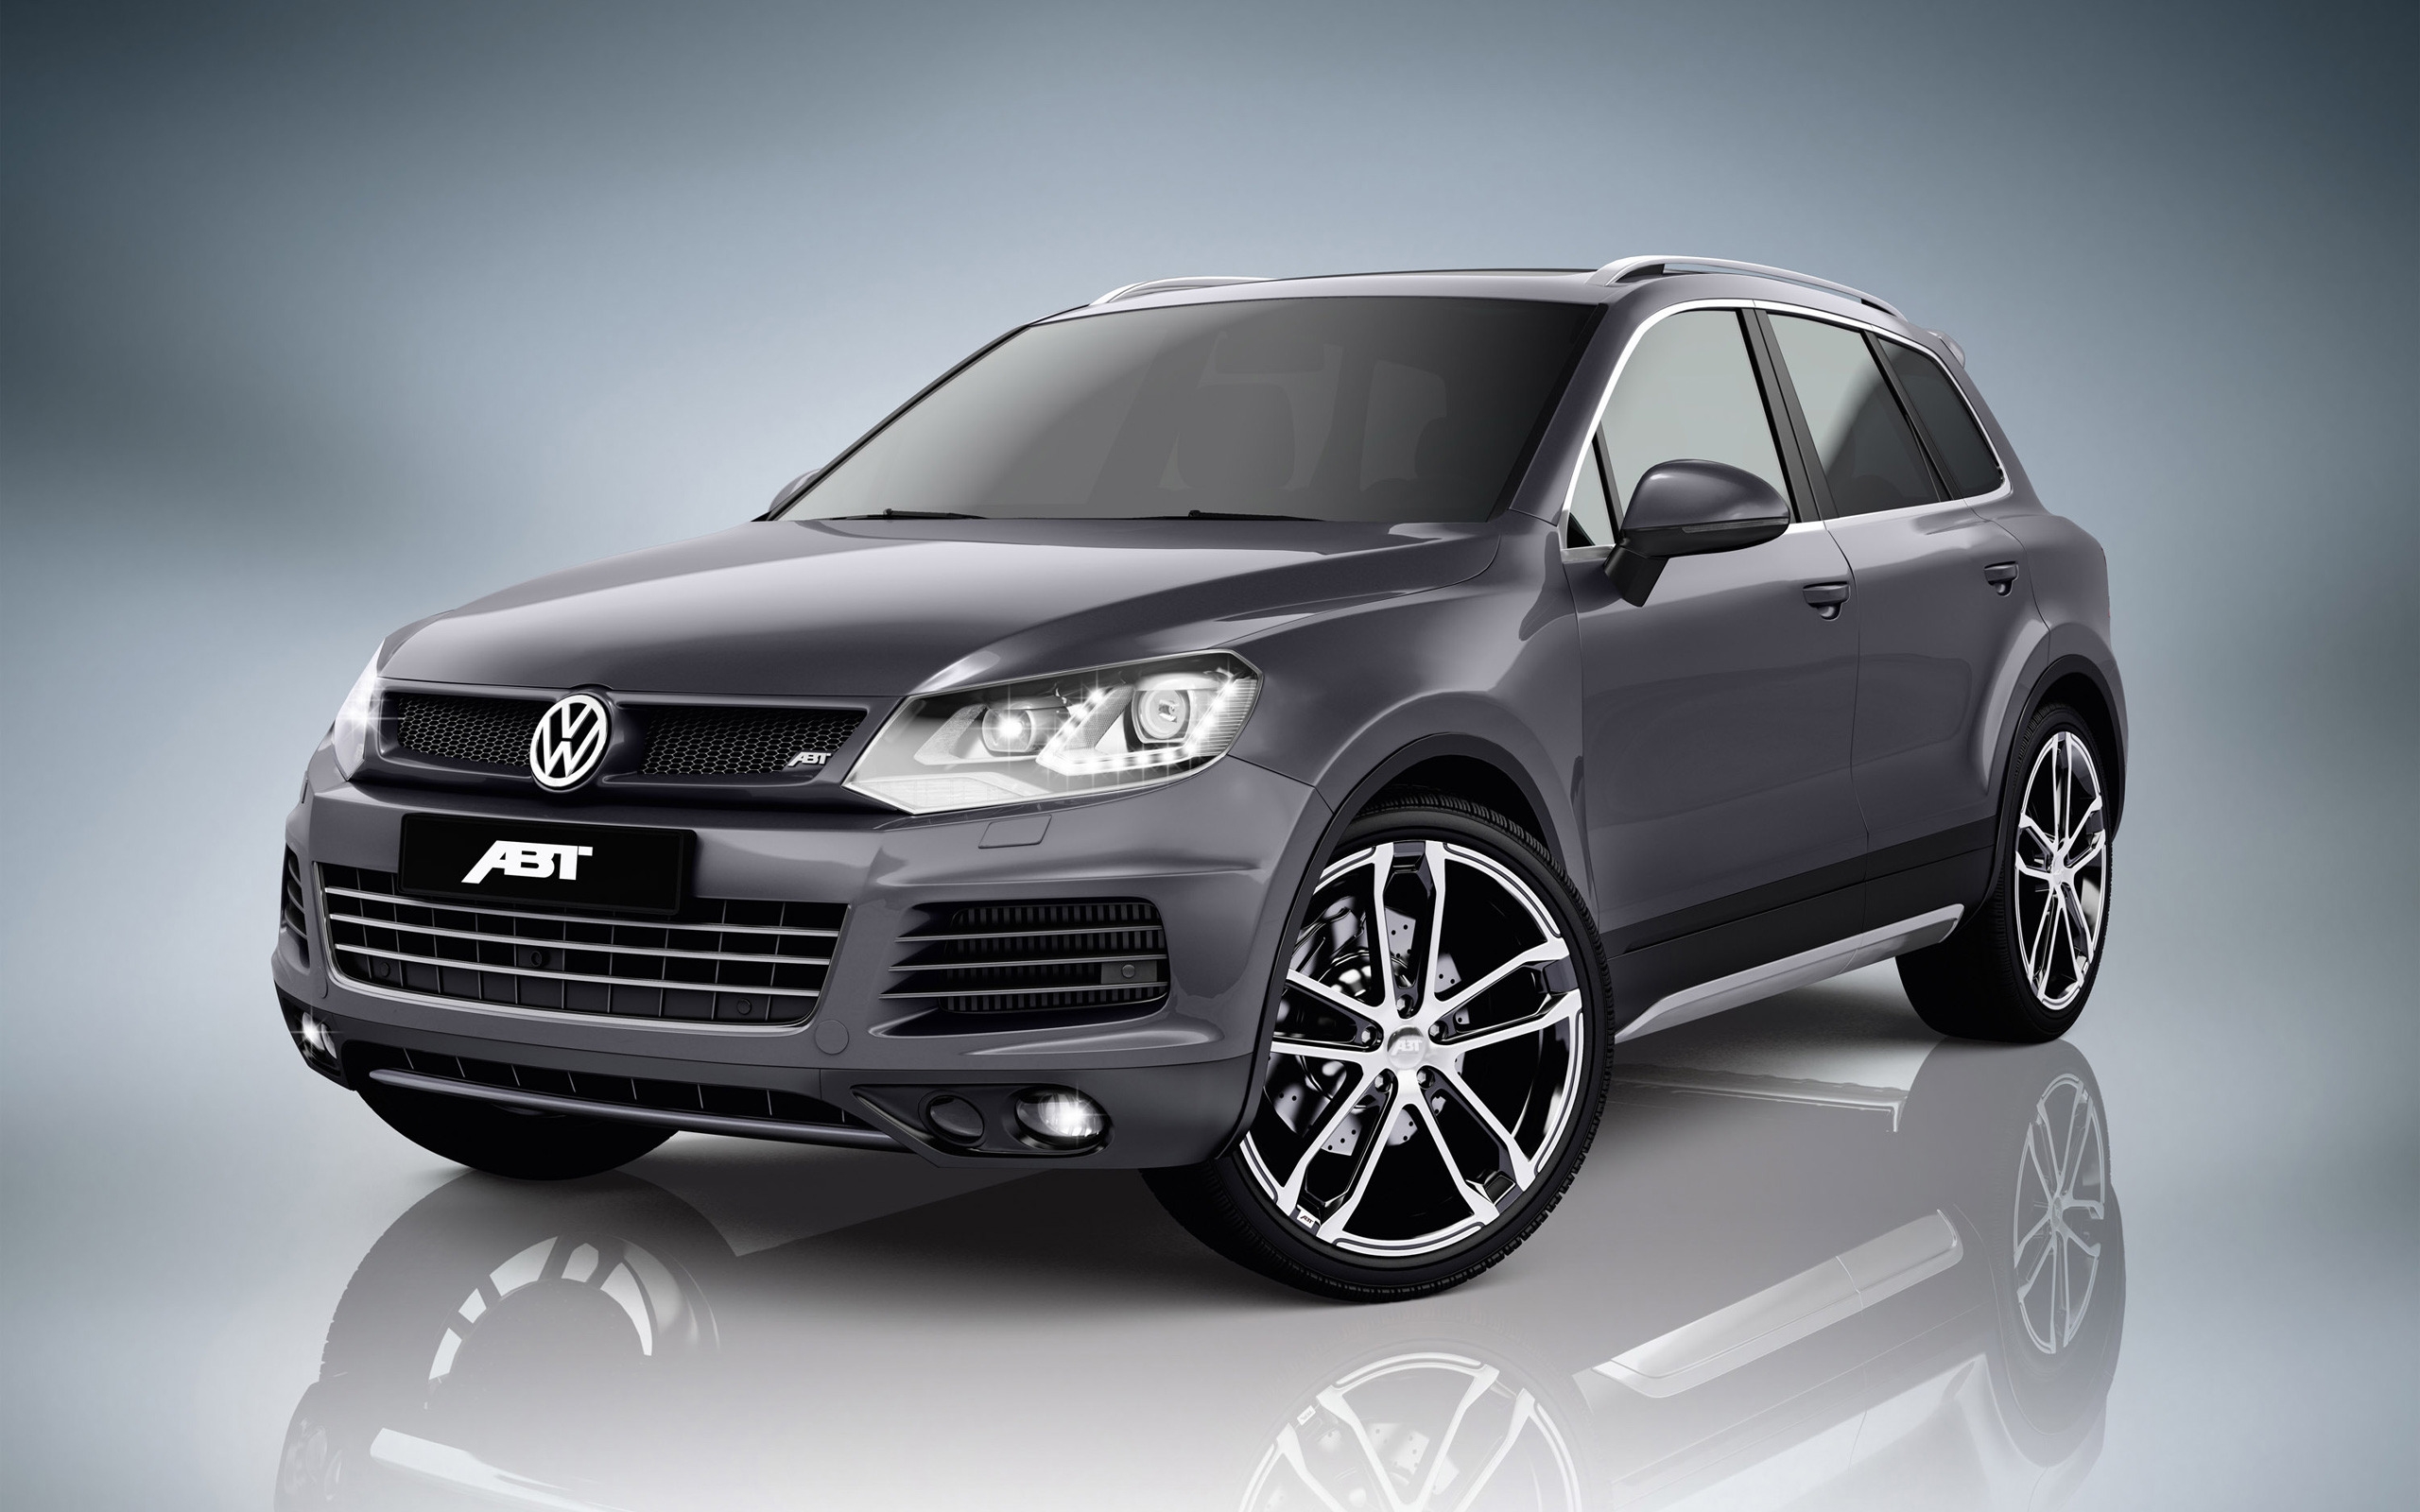 2011 ABT VW Touareg for 2560 x 1600 widescreen resolution